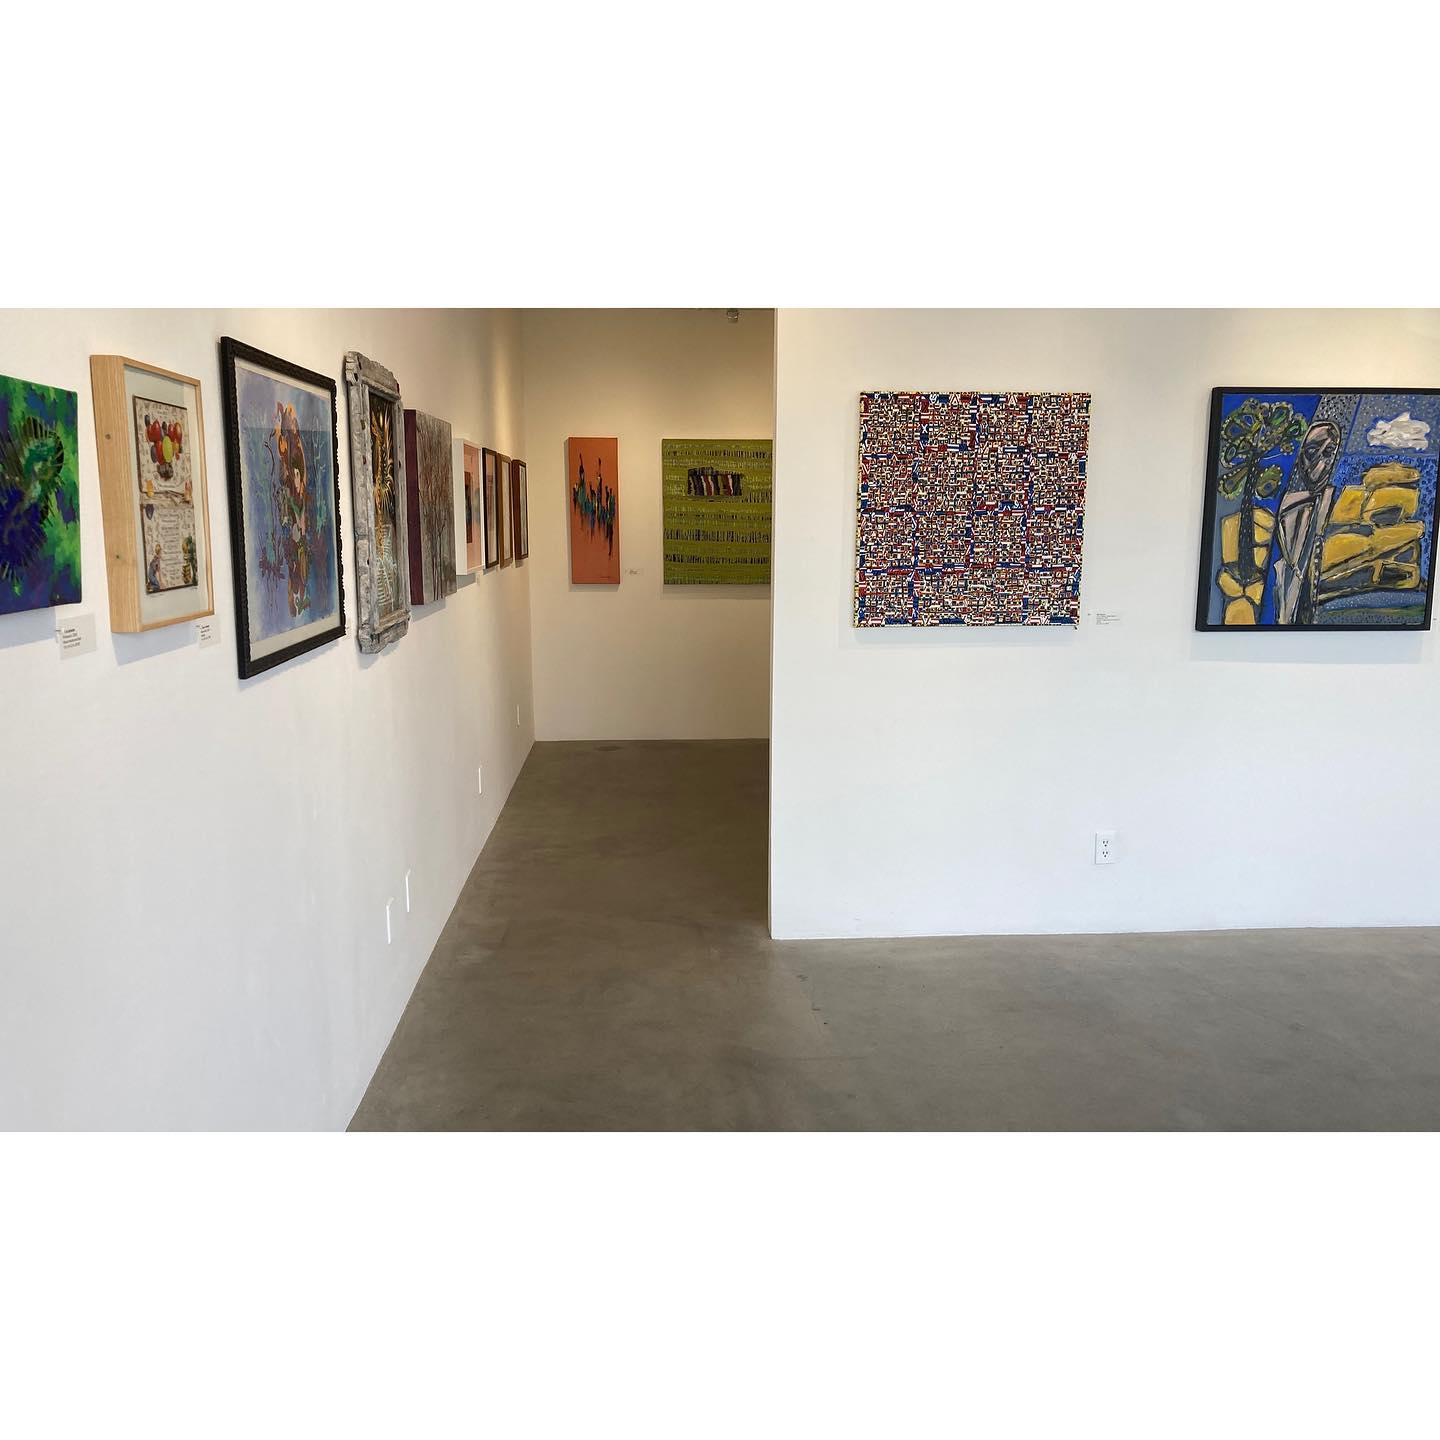 Gallery exhibition at Joshua Tree Art Gallery